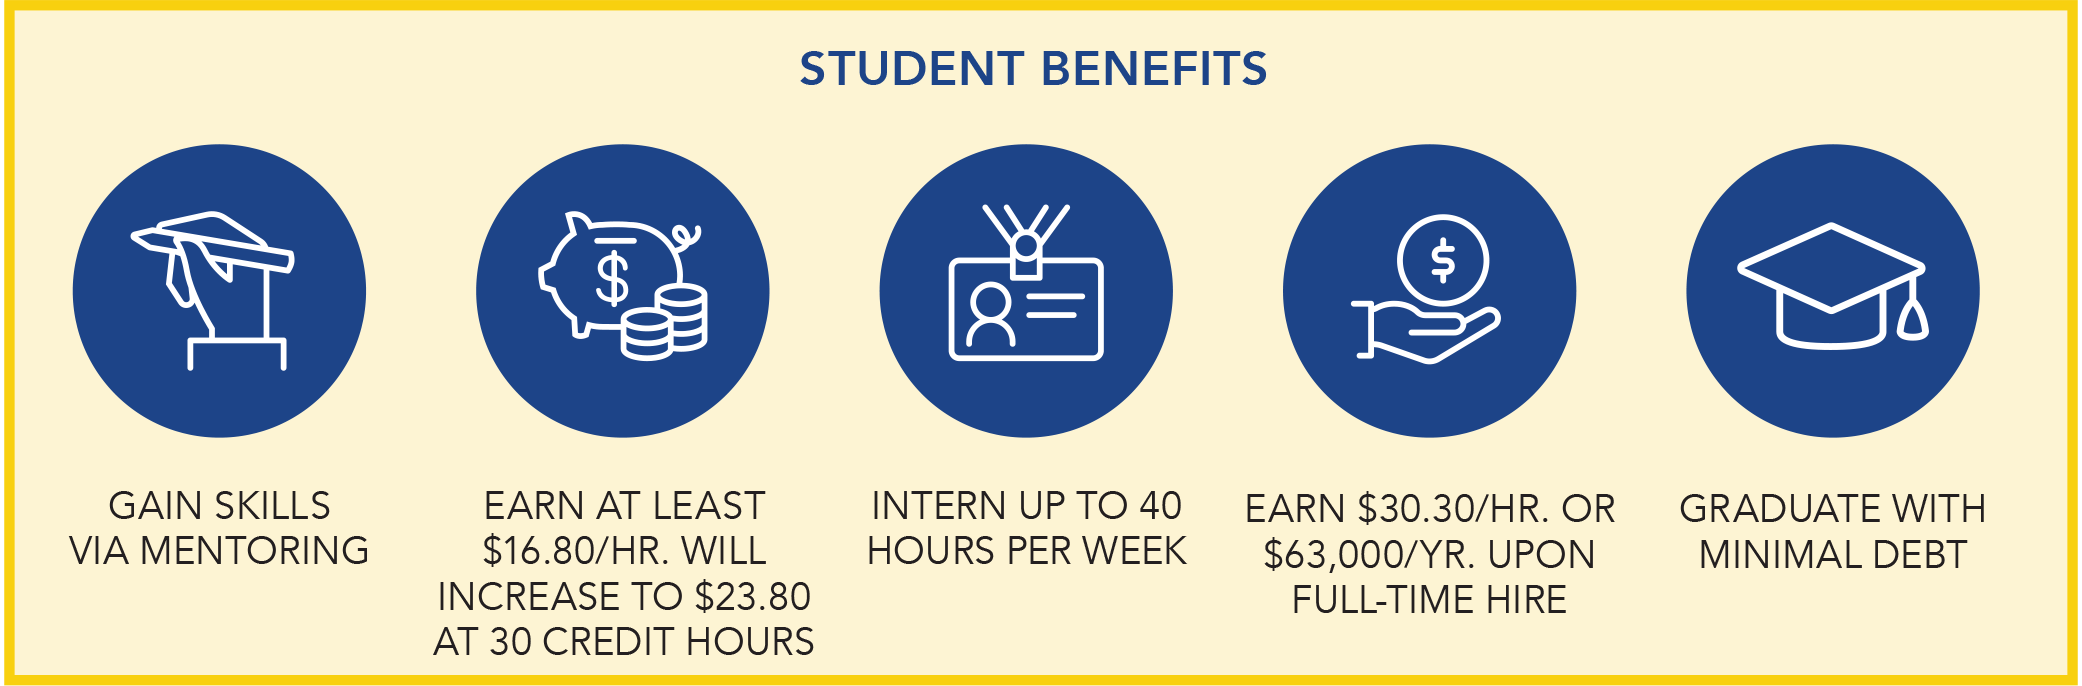 Honda Student Benefits